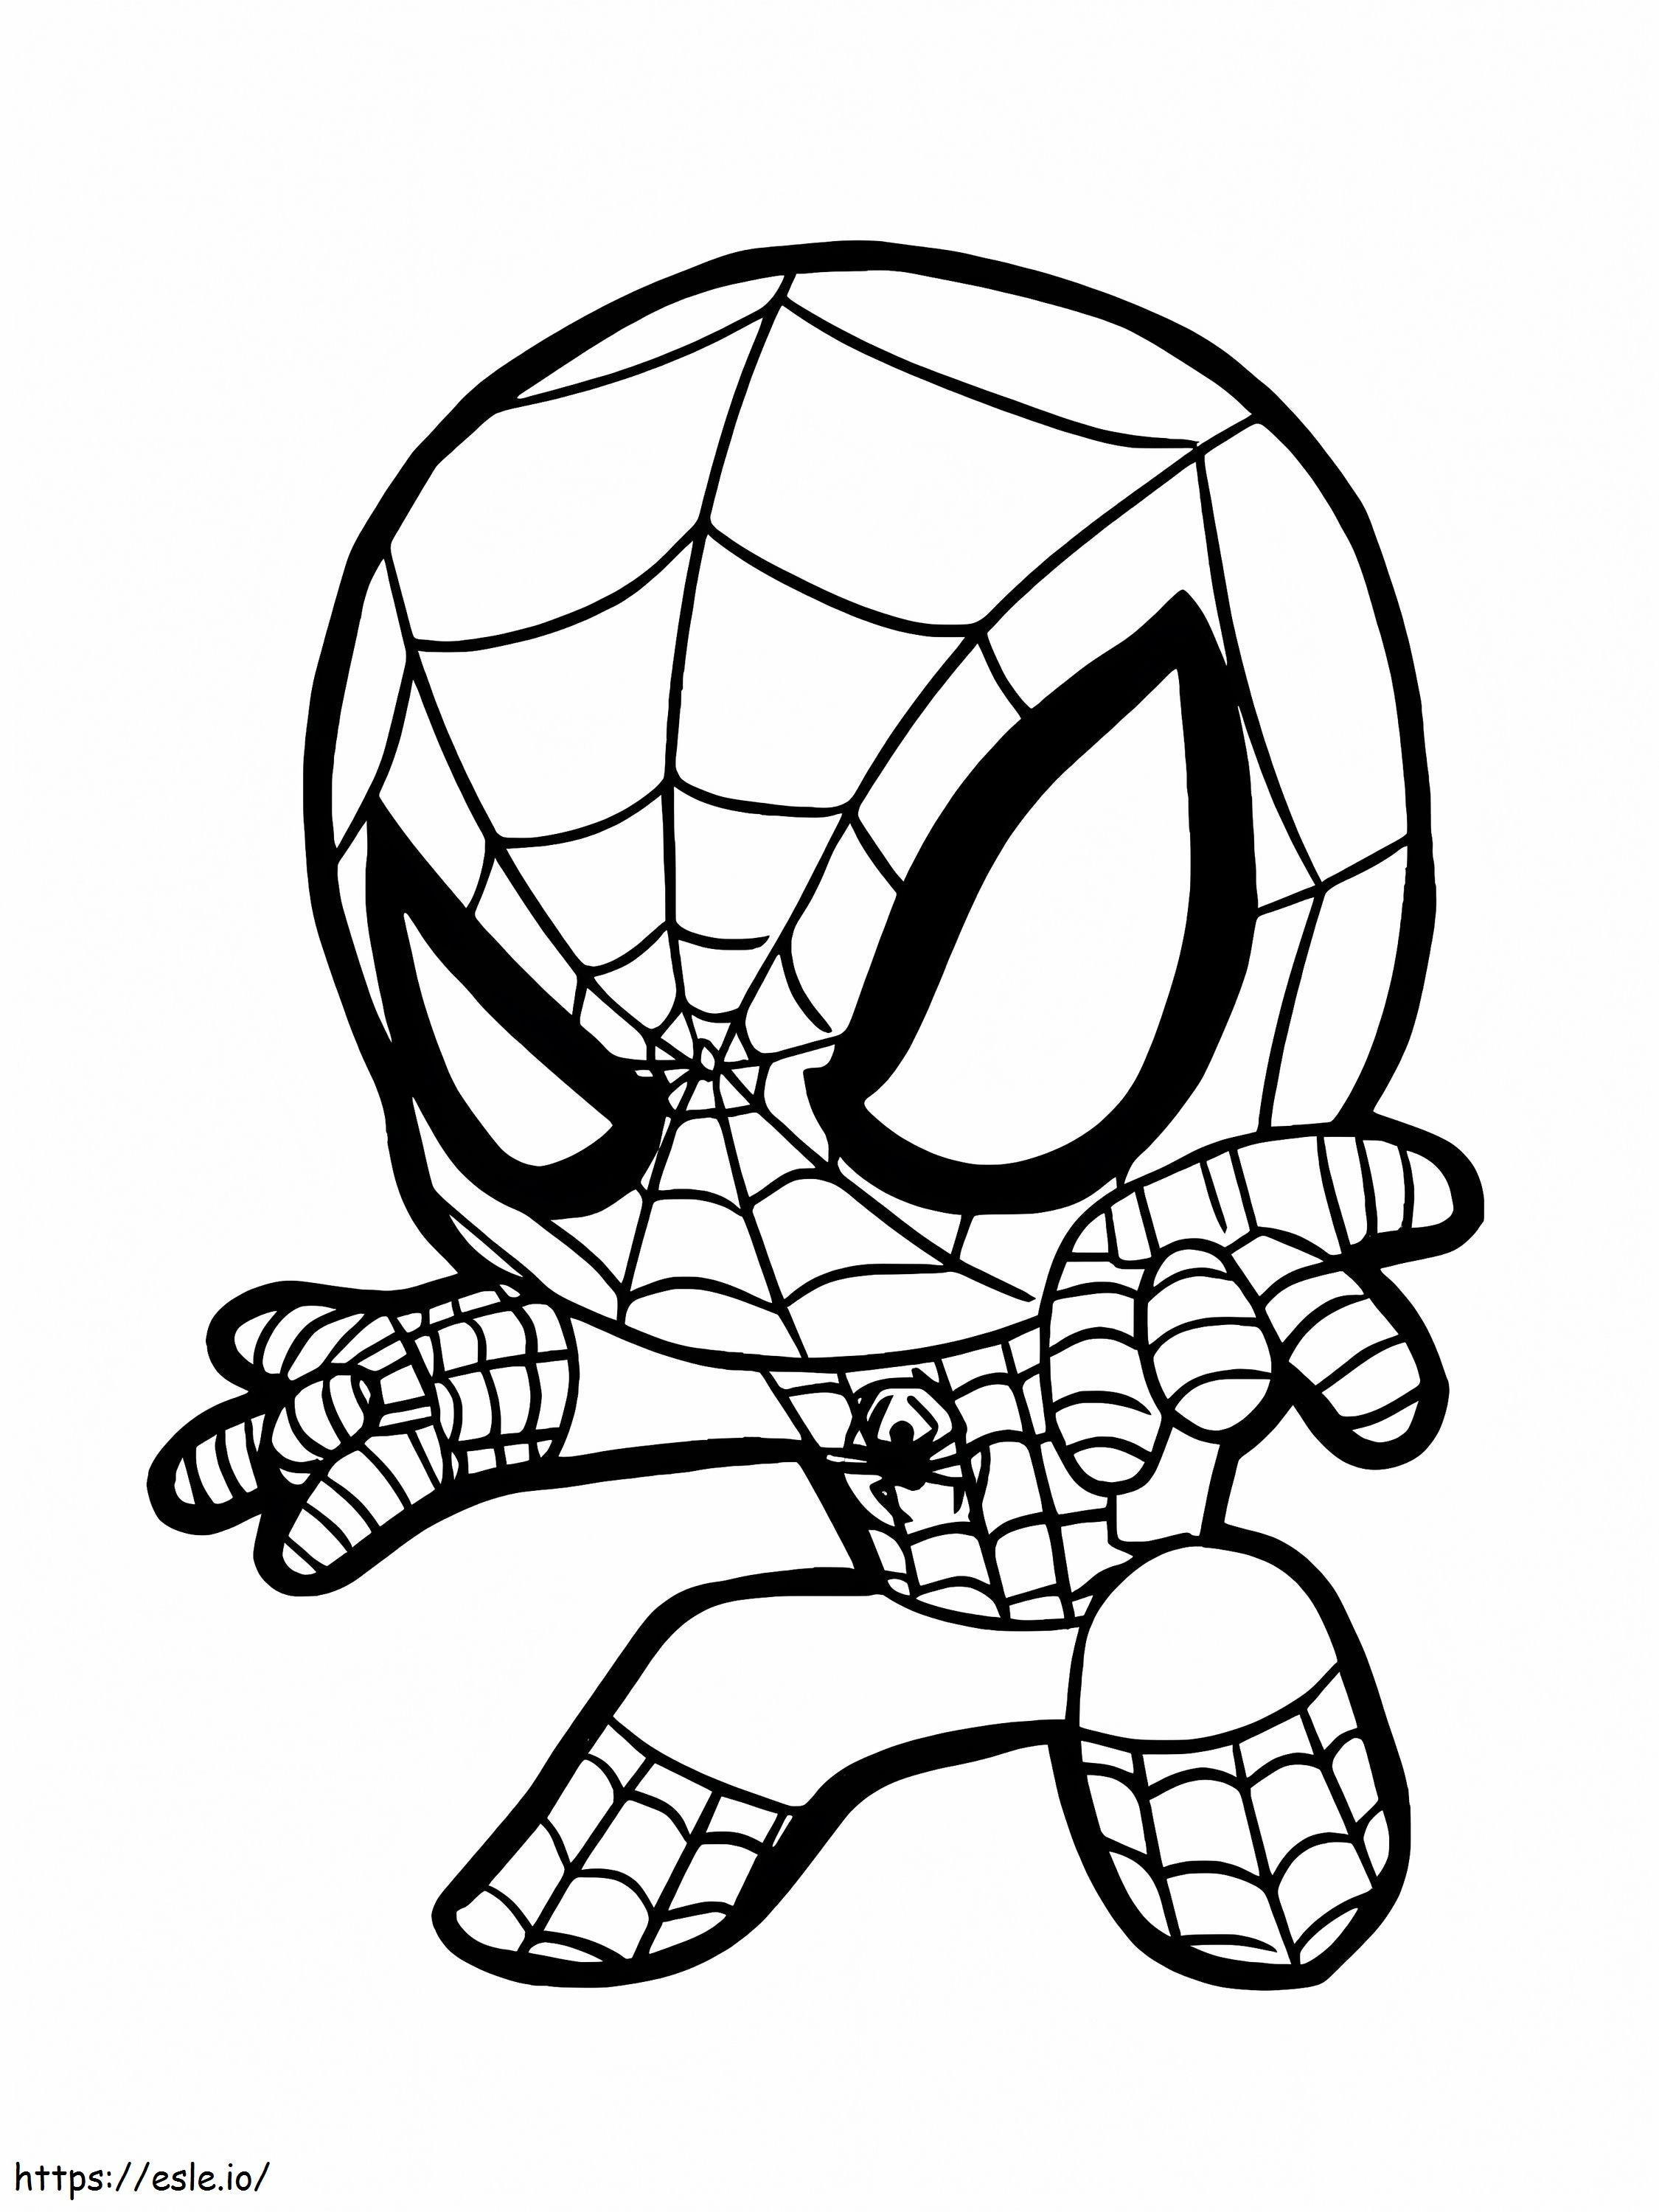 Chibi Spider-Man kolorowanka